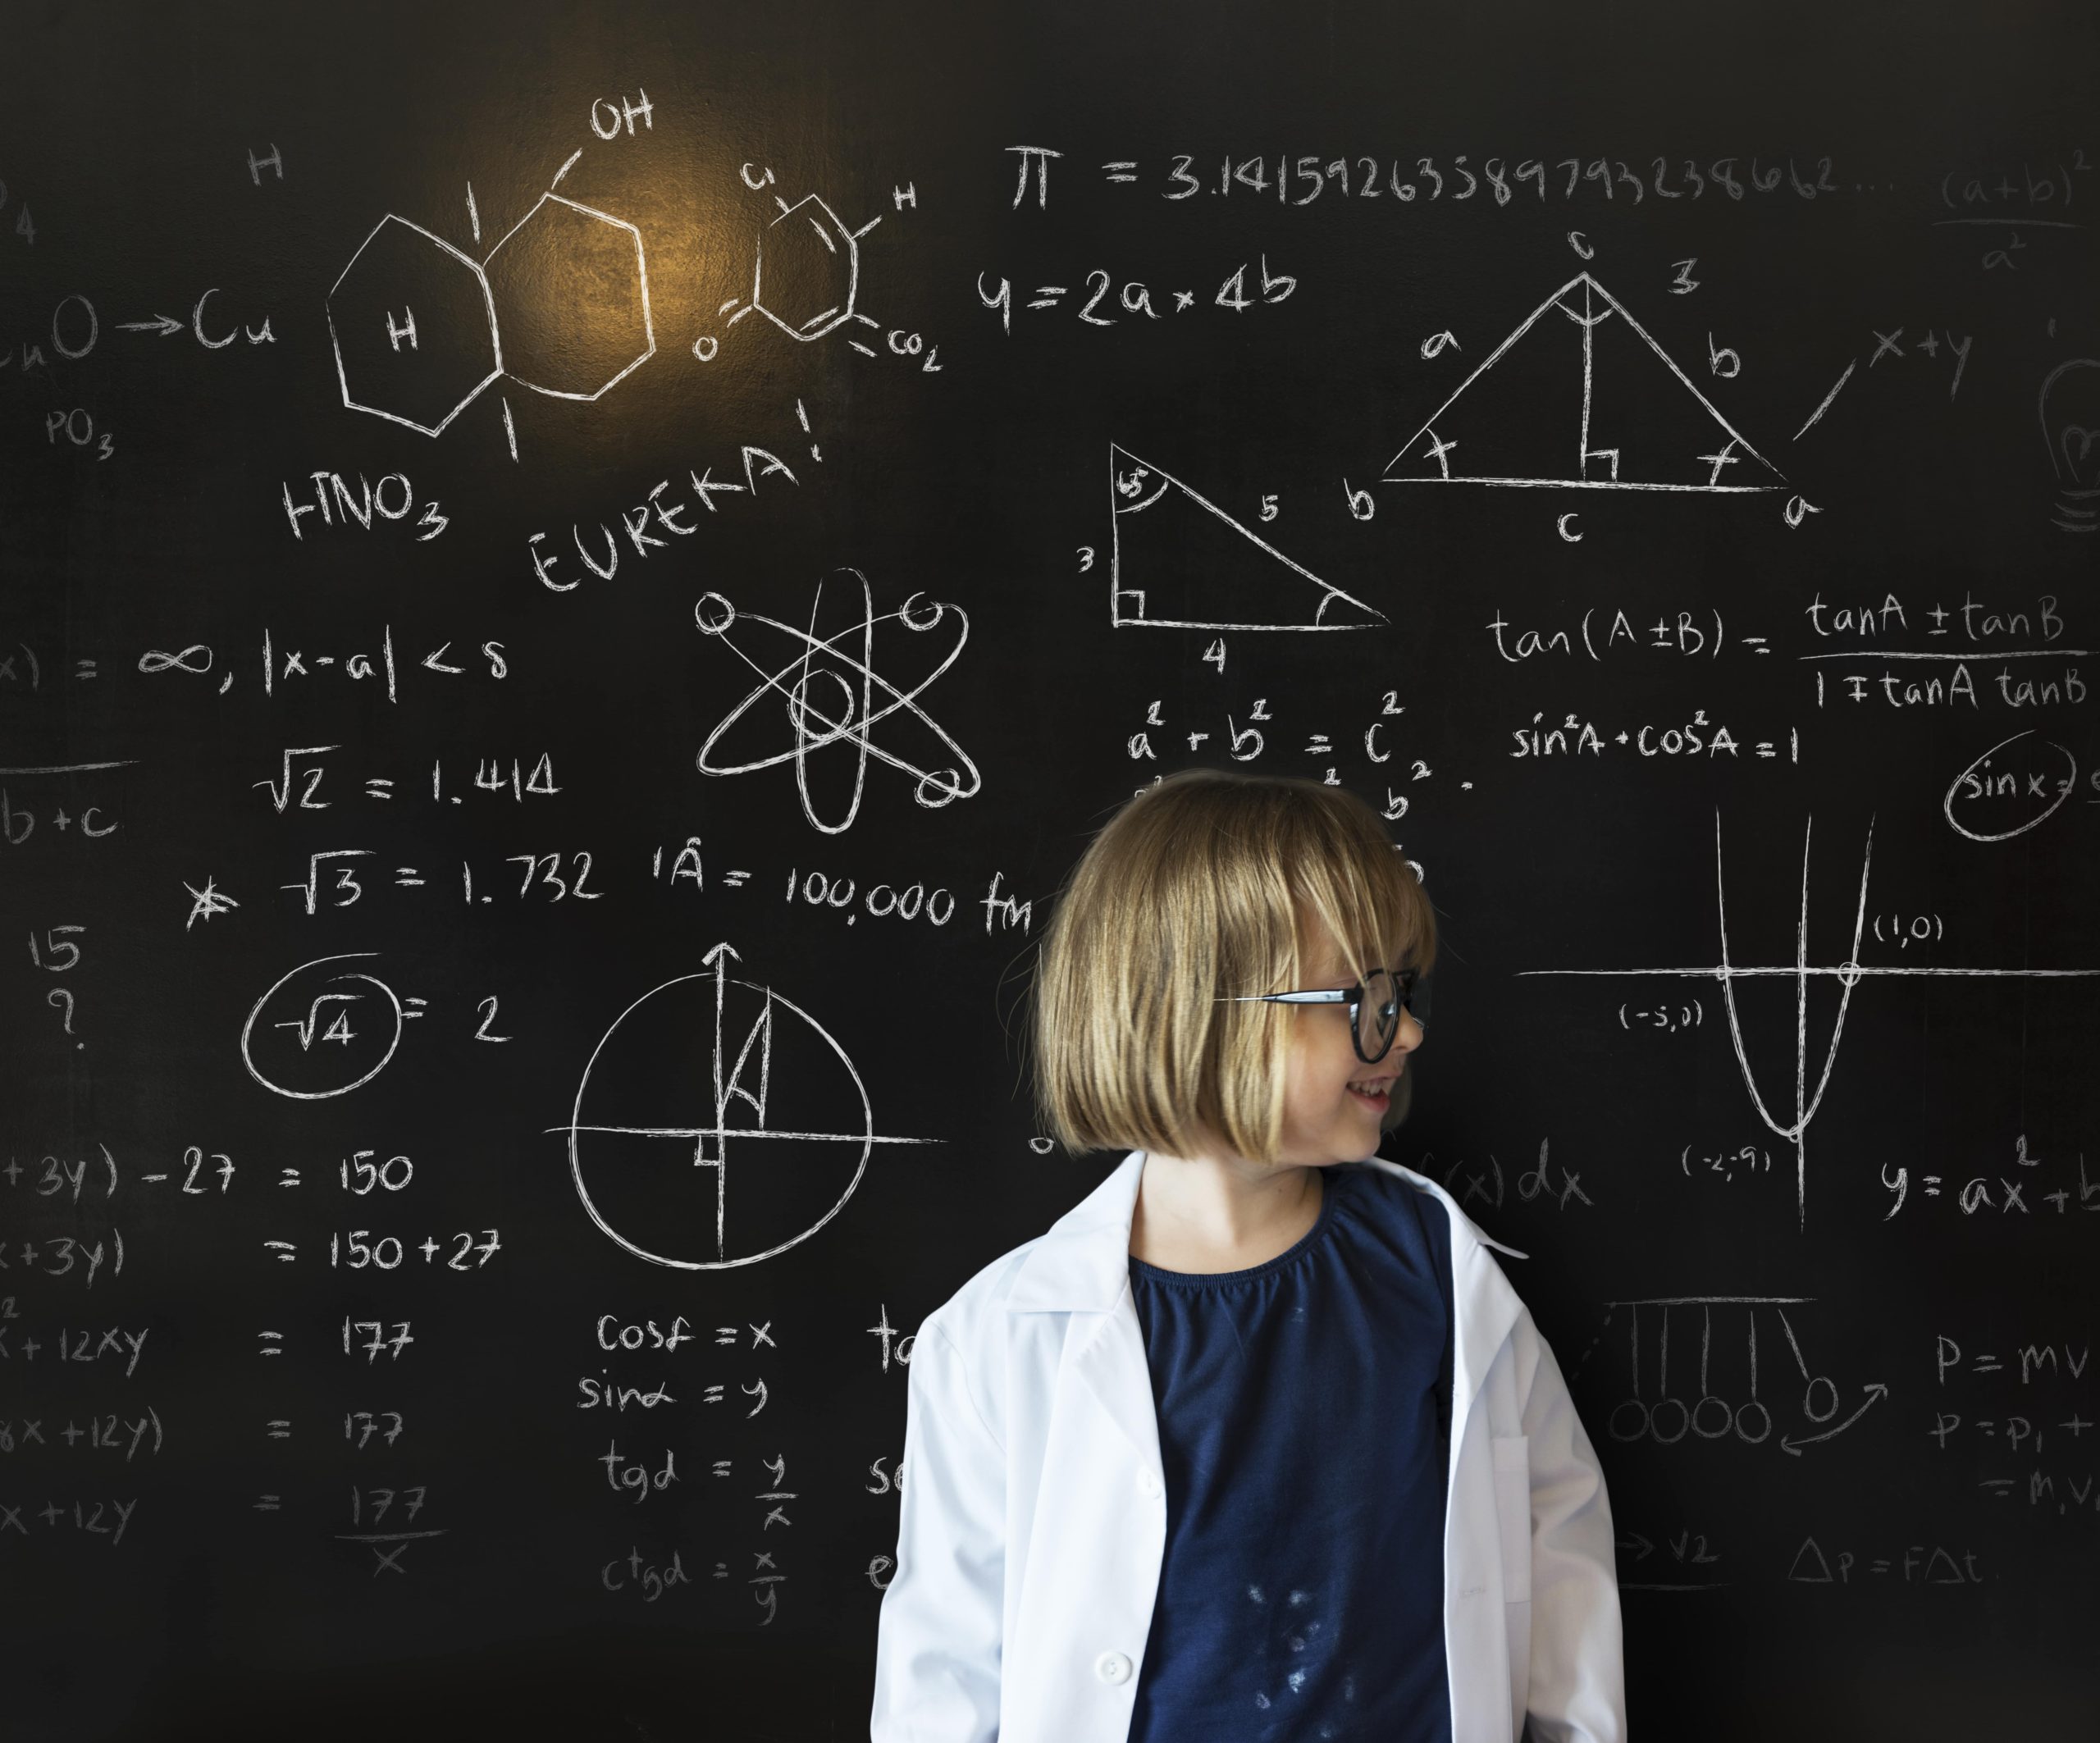 little-girl-education-blackboard-concept-2021-08-26-23-59-32-utc-min